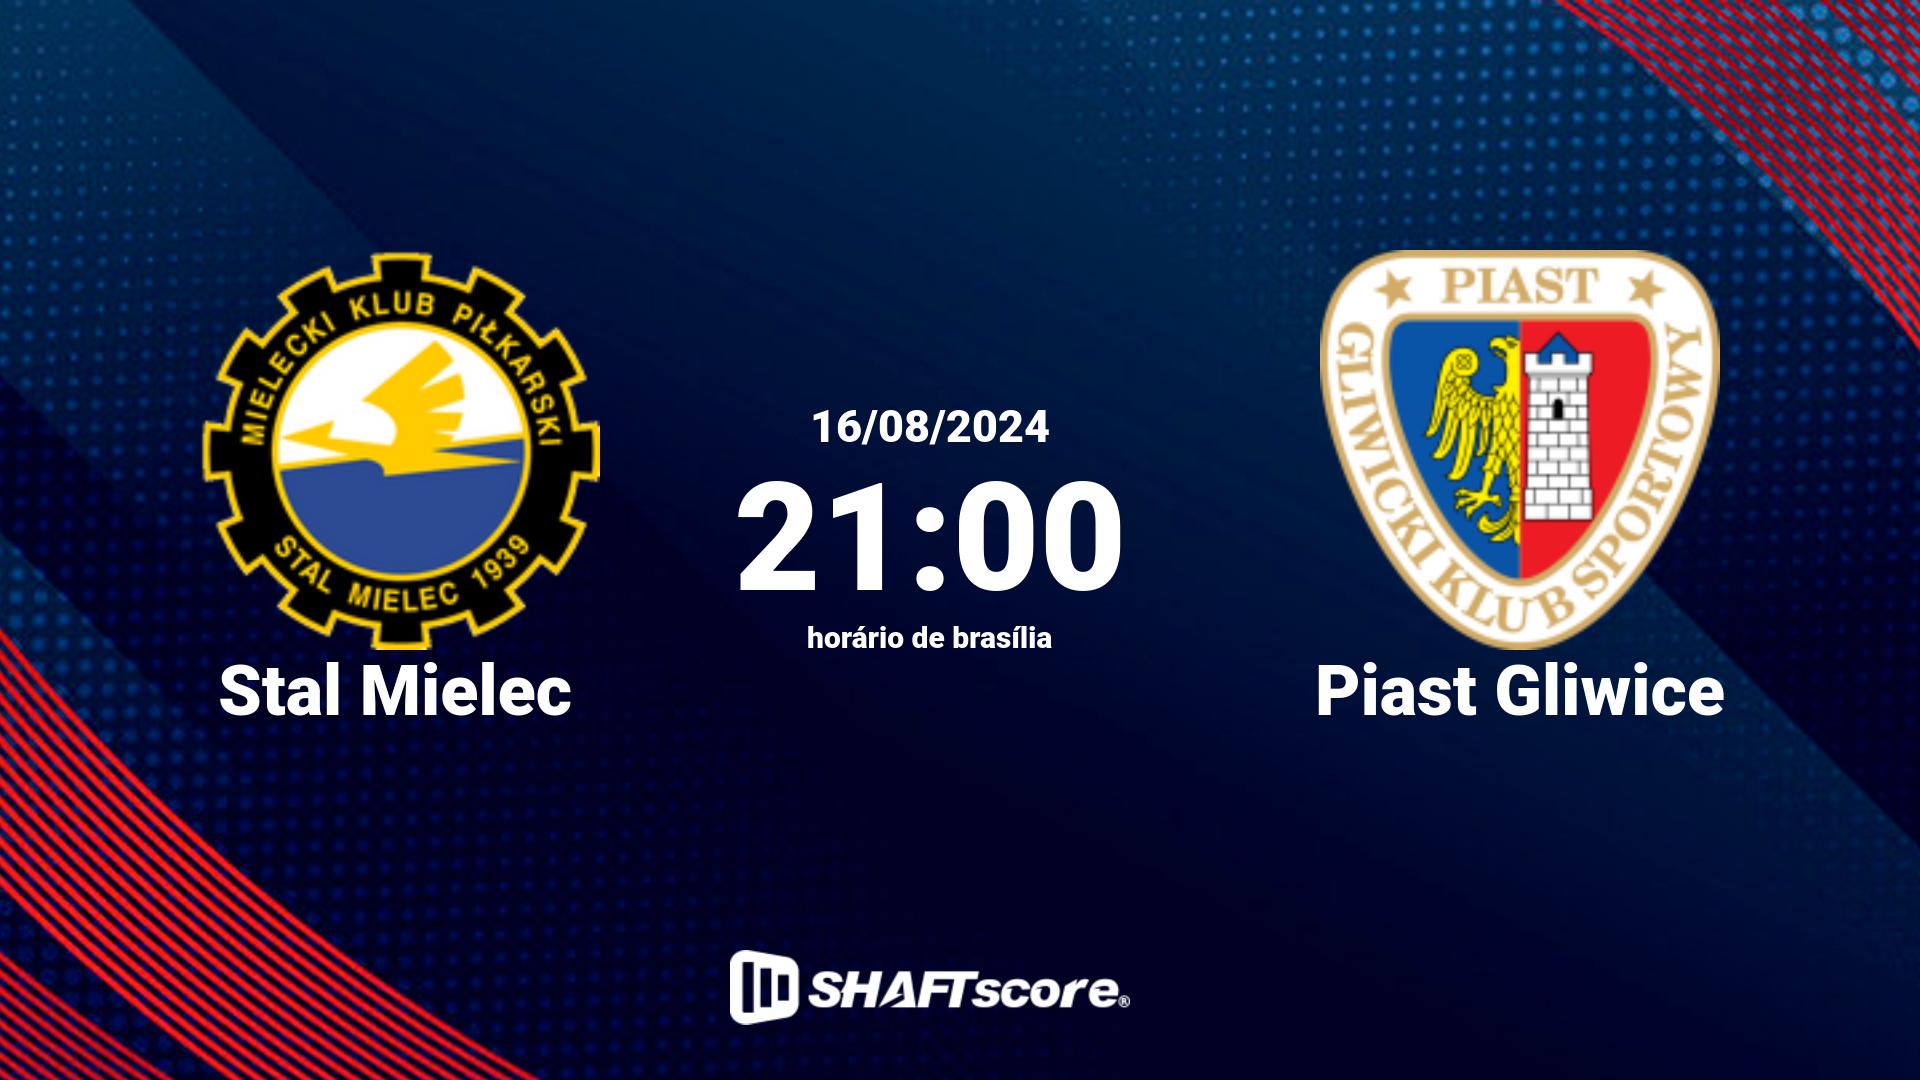 Estatísticas do jogo Stal Mielec vs Piast Gliwice 16.08 21:00